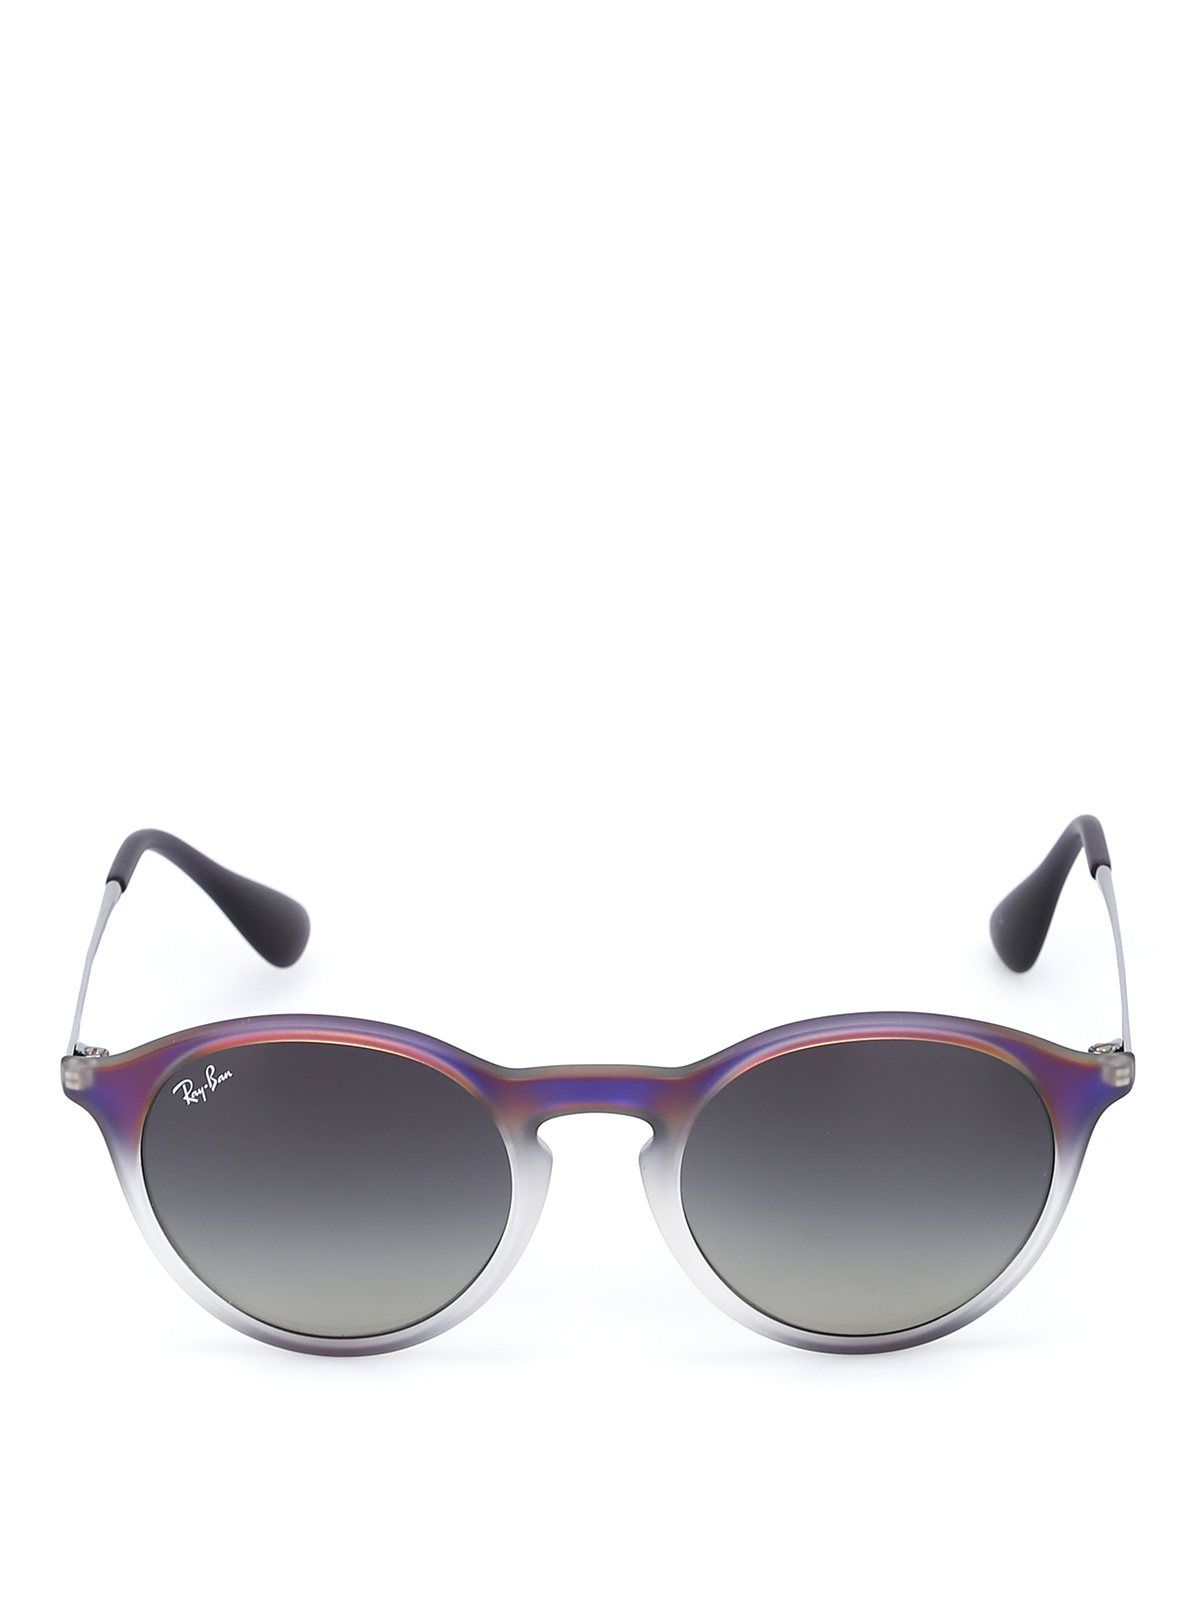 Sunglasses Ray Ban - Violet and grey pantos sunglasses - RB4243622311